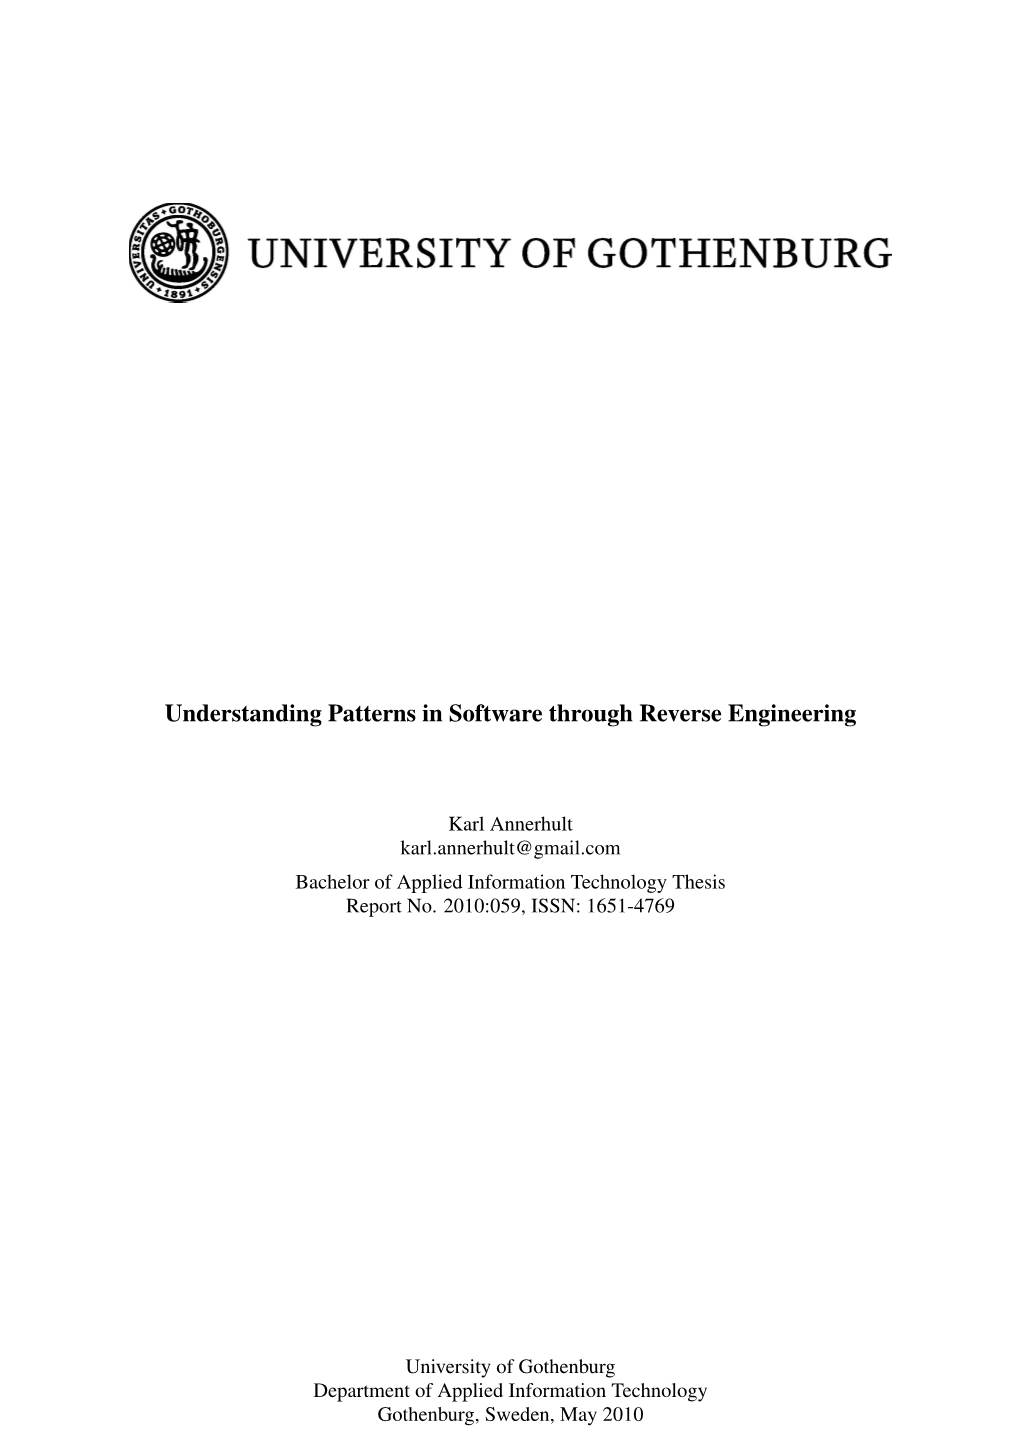 Understanding Patterns in Software Through Reverse Engineering